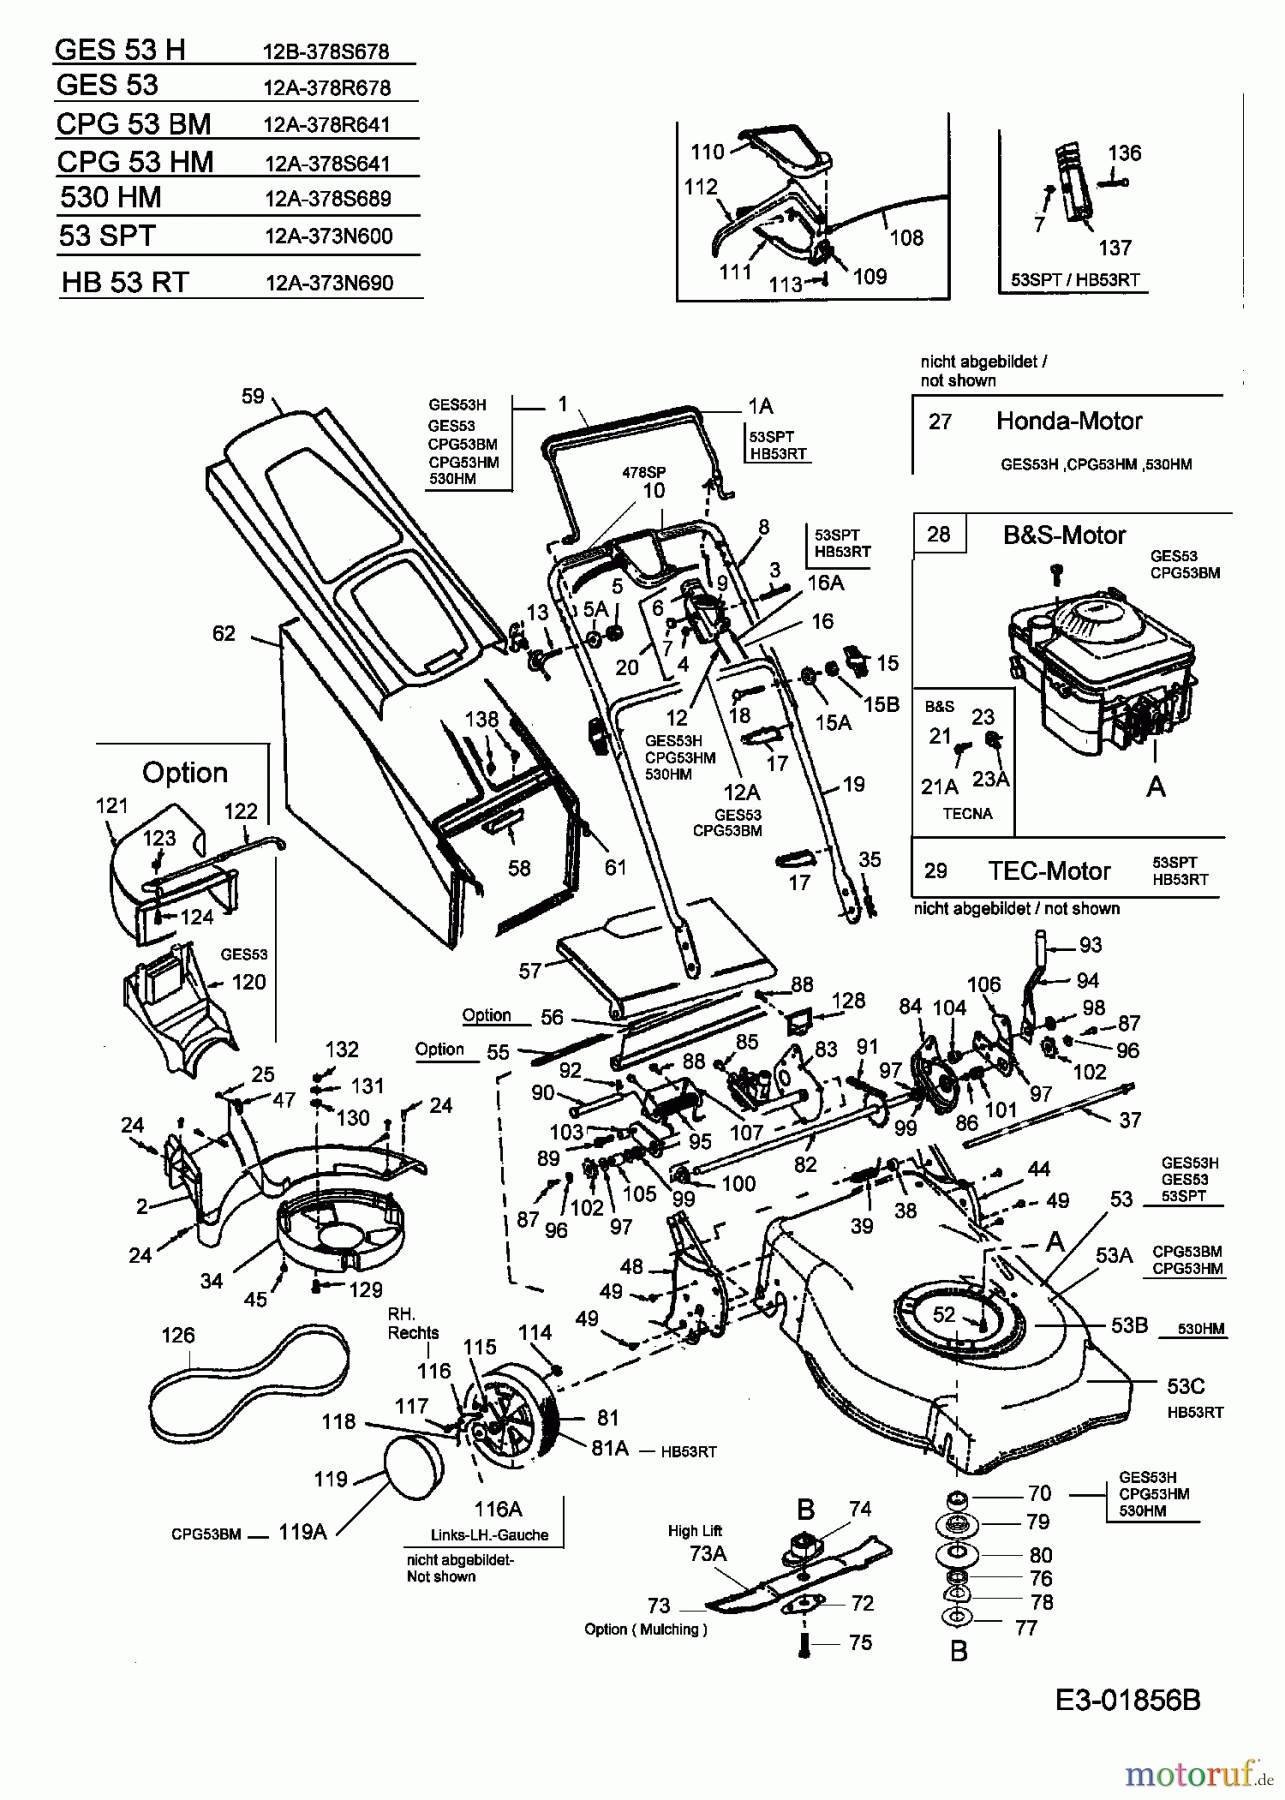  Central Park Petrol mower self propelled CPG 53 BM 12A-378R641  (2004) Basic machine